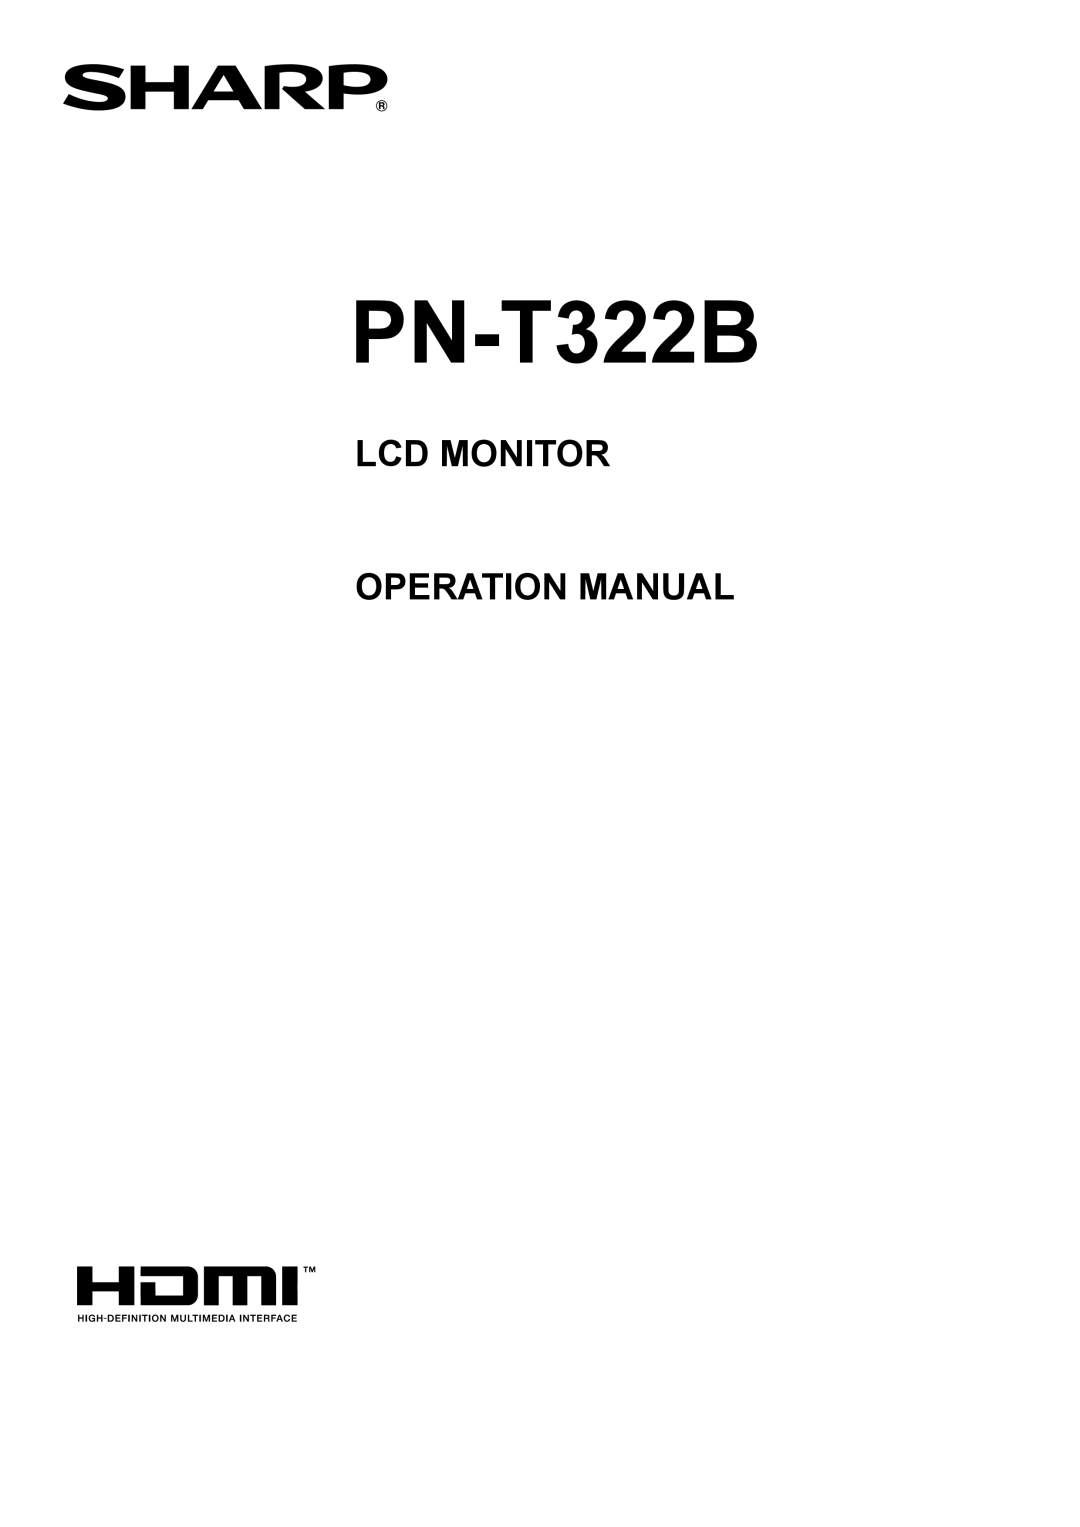 Sharp PN-T322B operation manual 